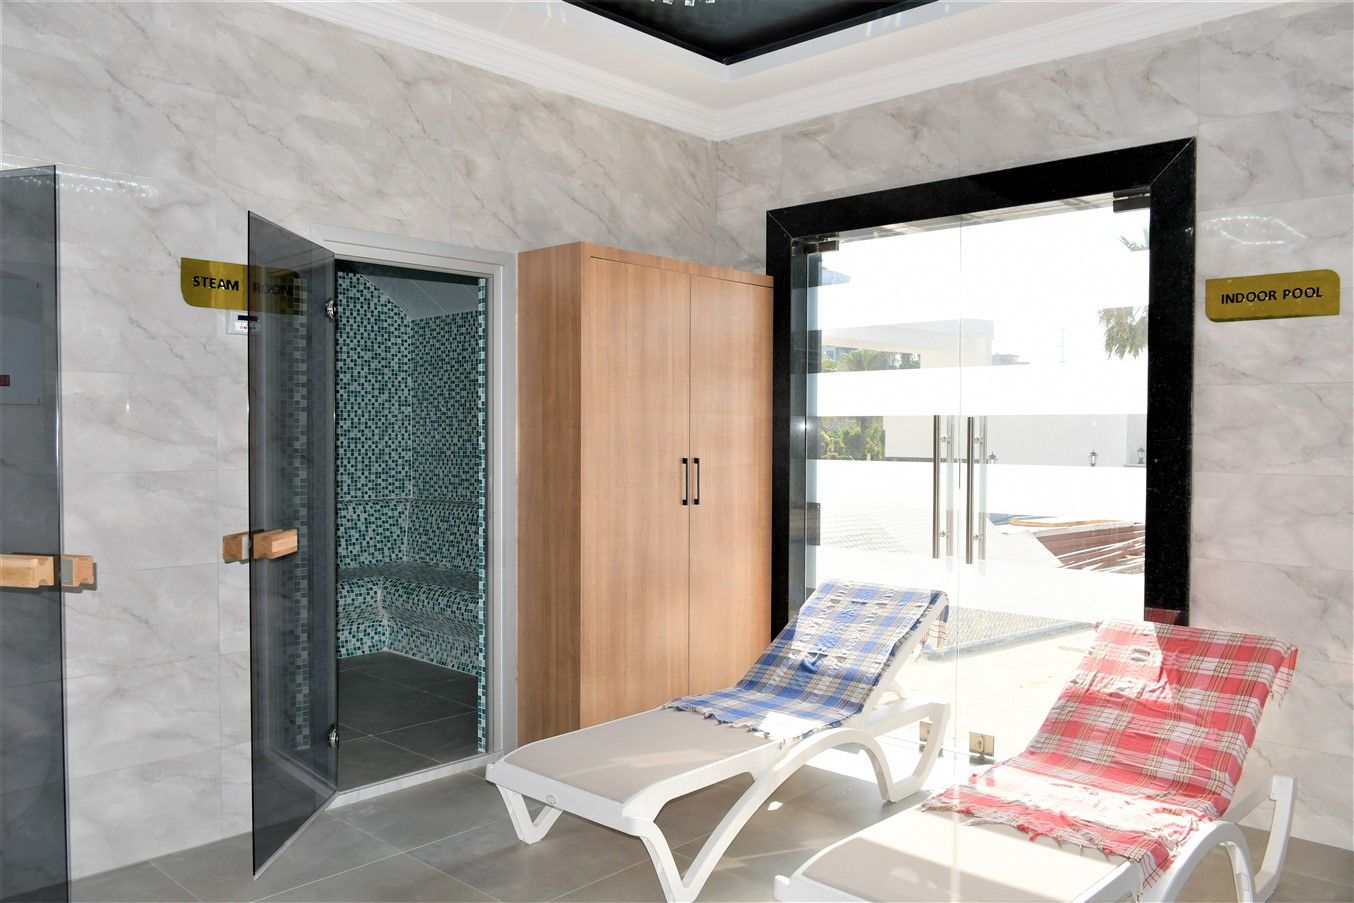 1-bedroom apartment for rent, new comfort class residence in Mahmutlar